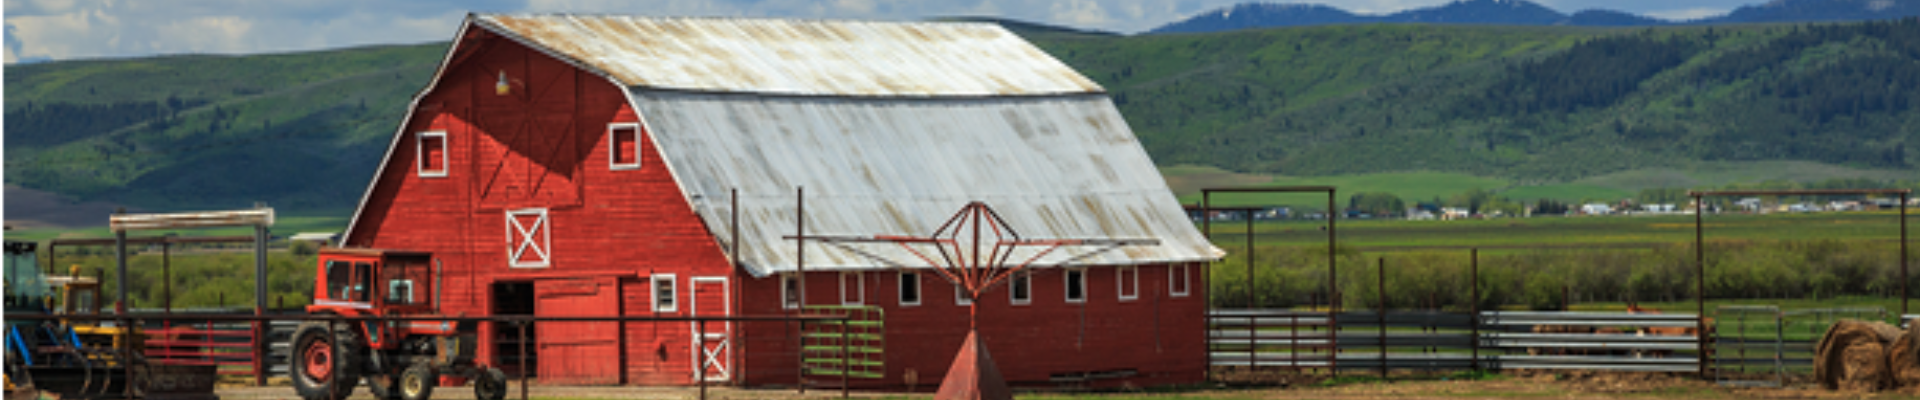 a barn in a farm